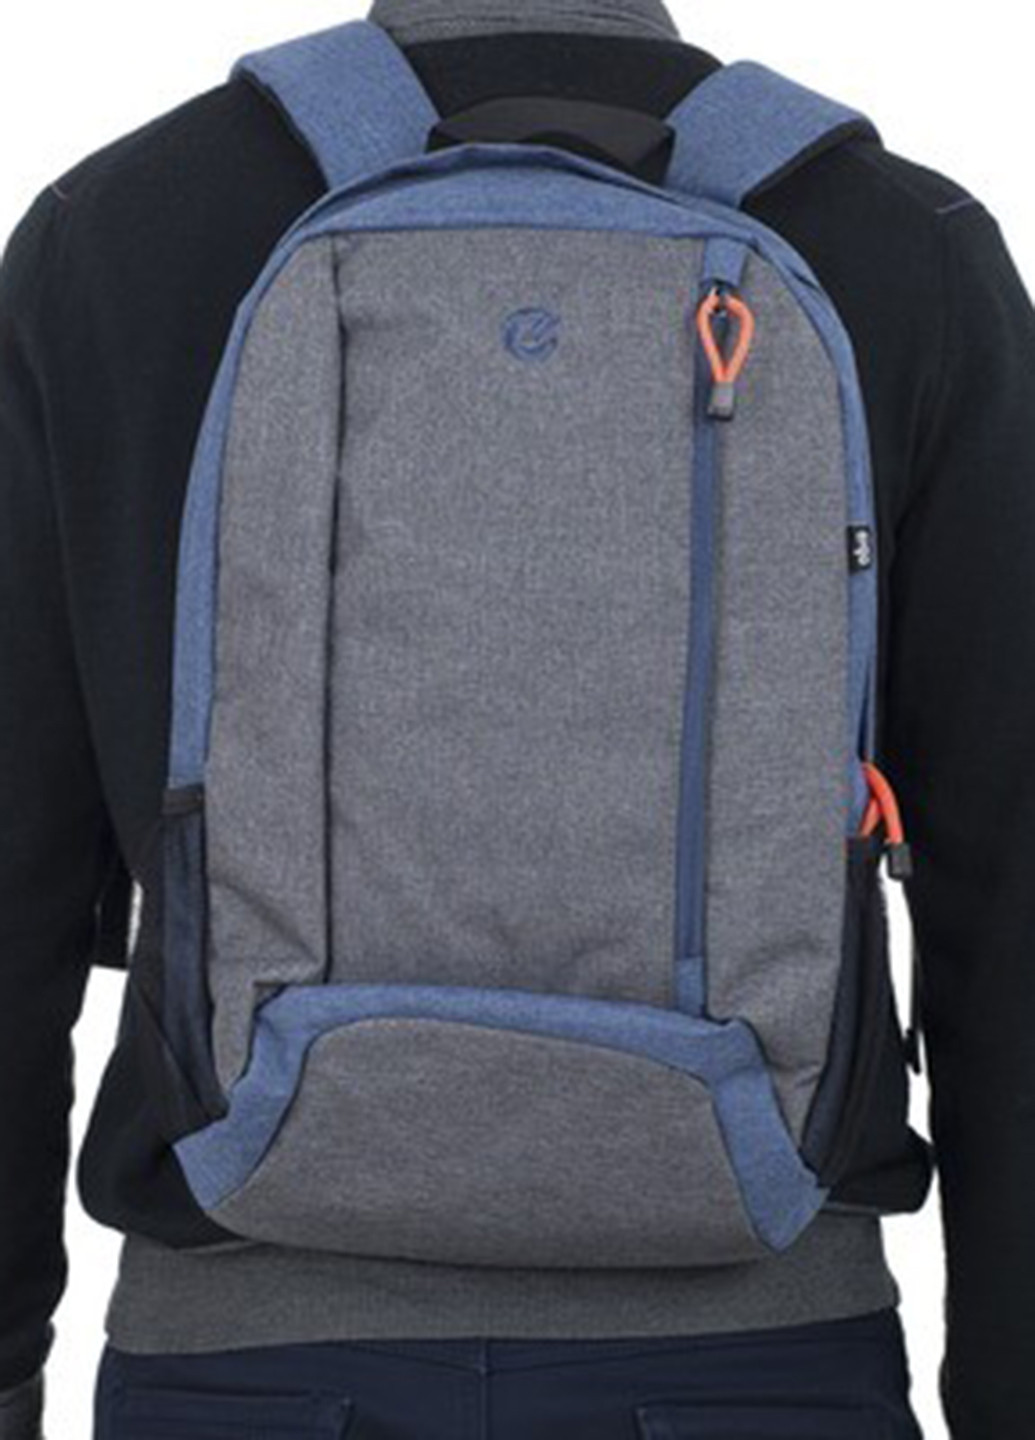 Рюкзак для ноутбука Ergo boston 316 (gray) (135165274)